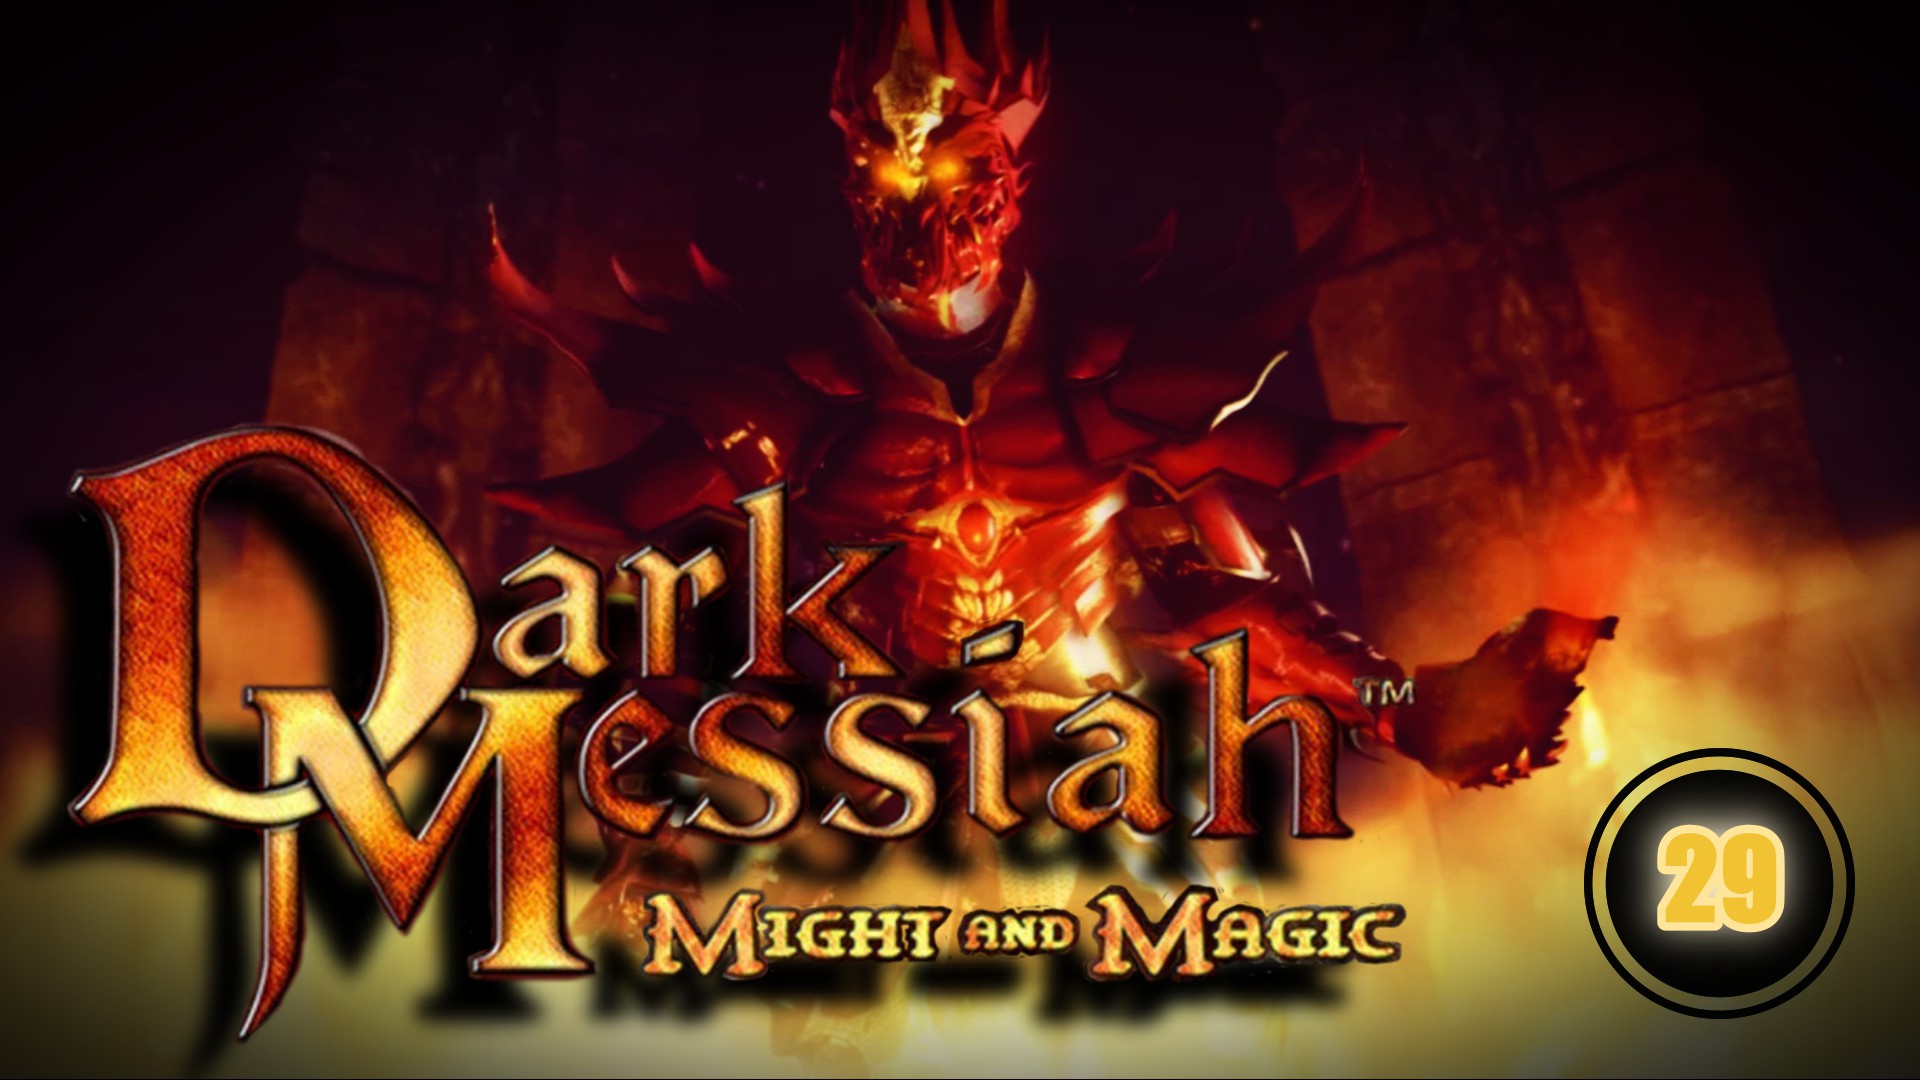 Dark Messiah of Might and Magic 29